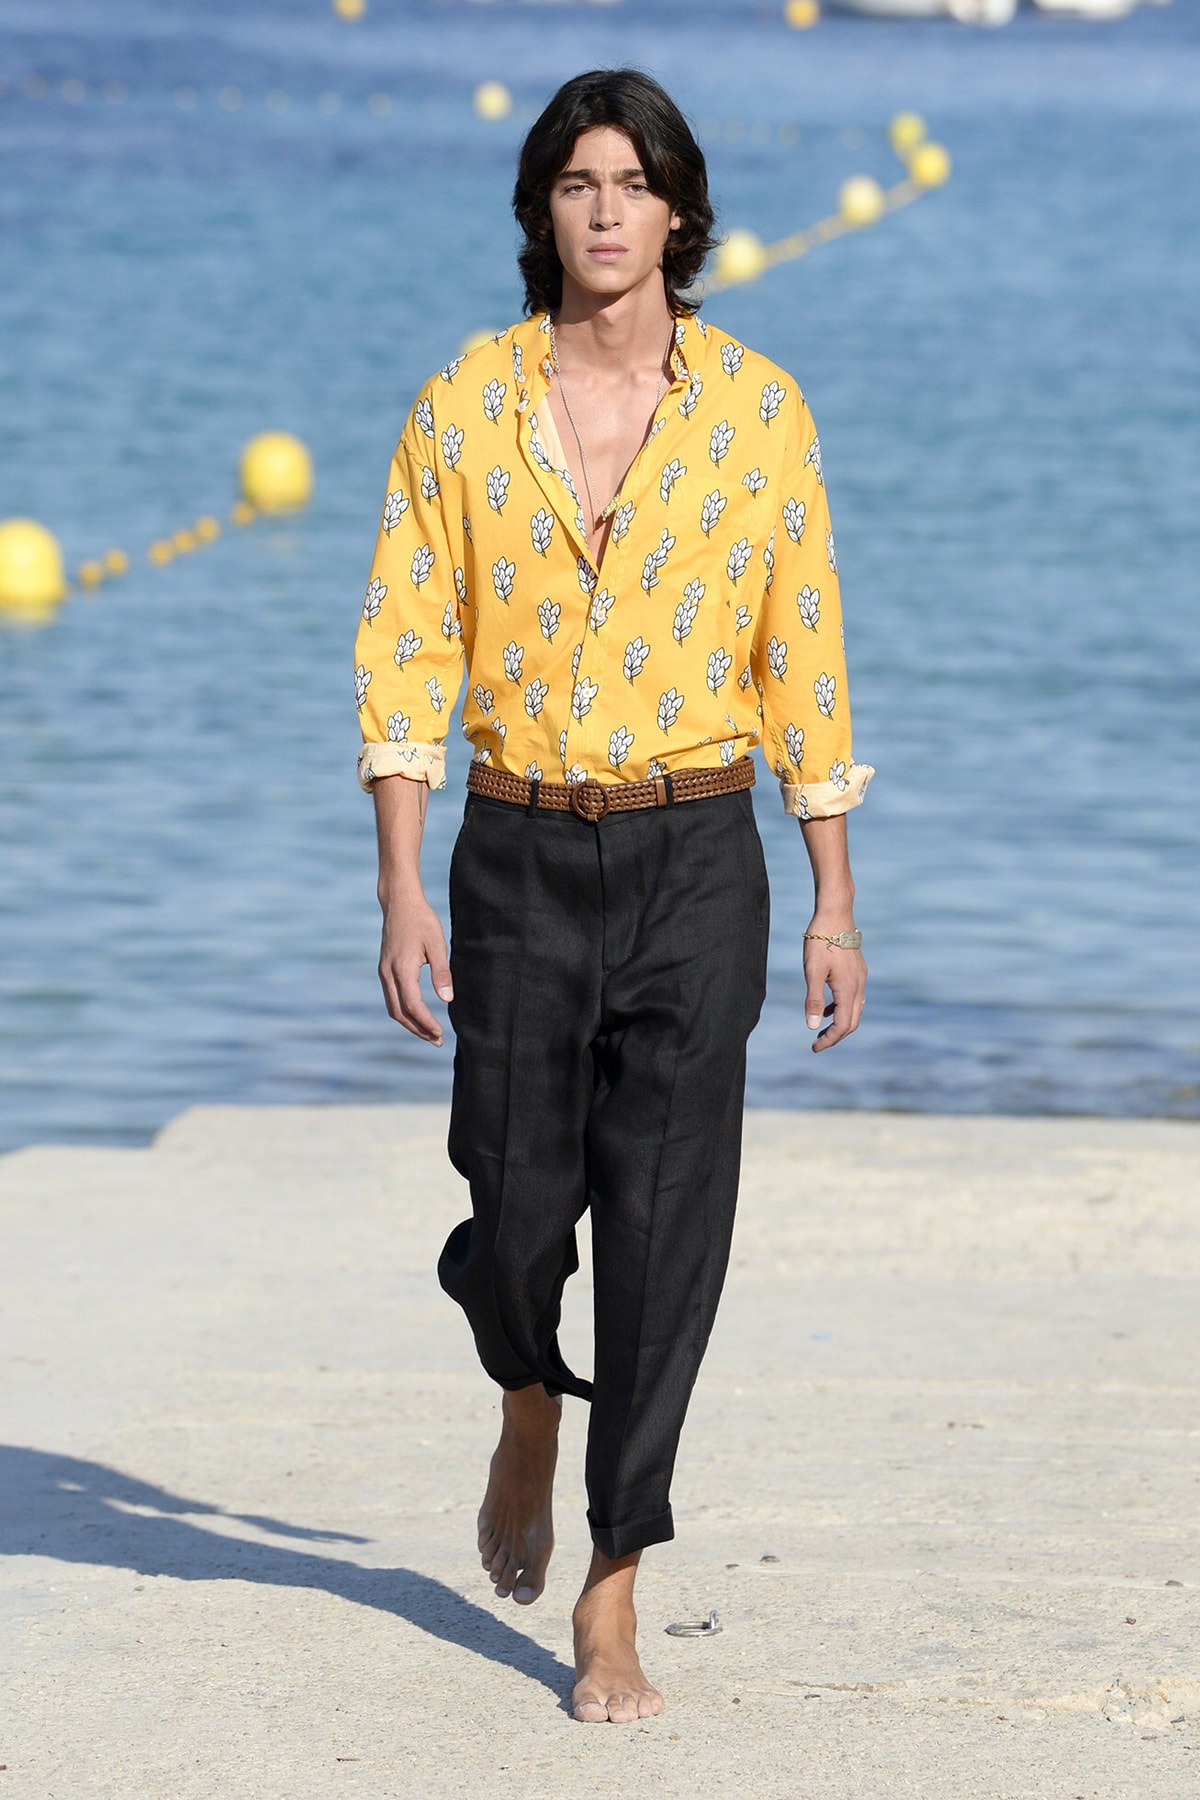 Jacquemus Spring Summer 2019 Menswear Collection debut premiere simon porte paris fashion week first